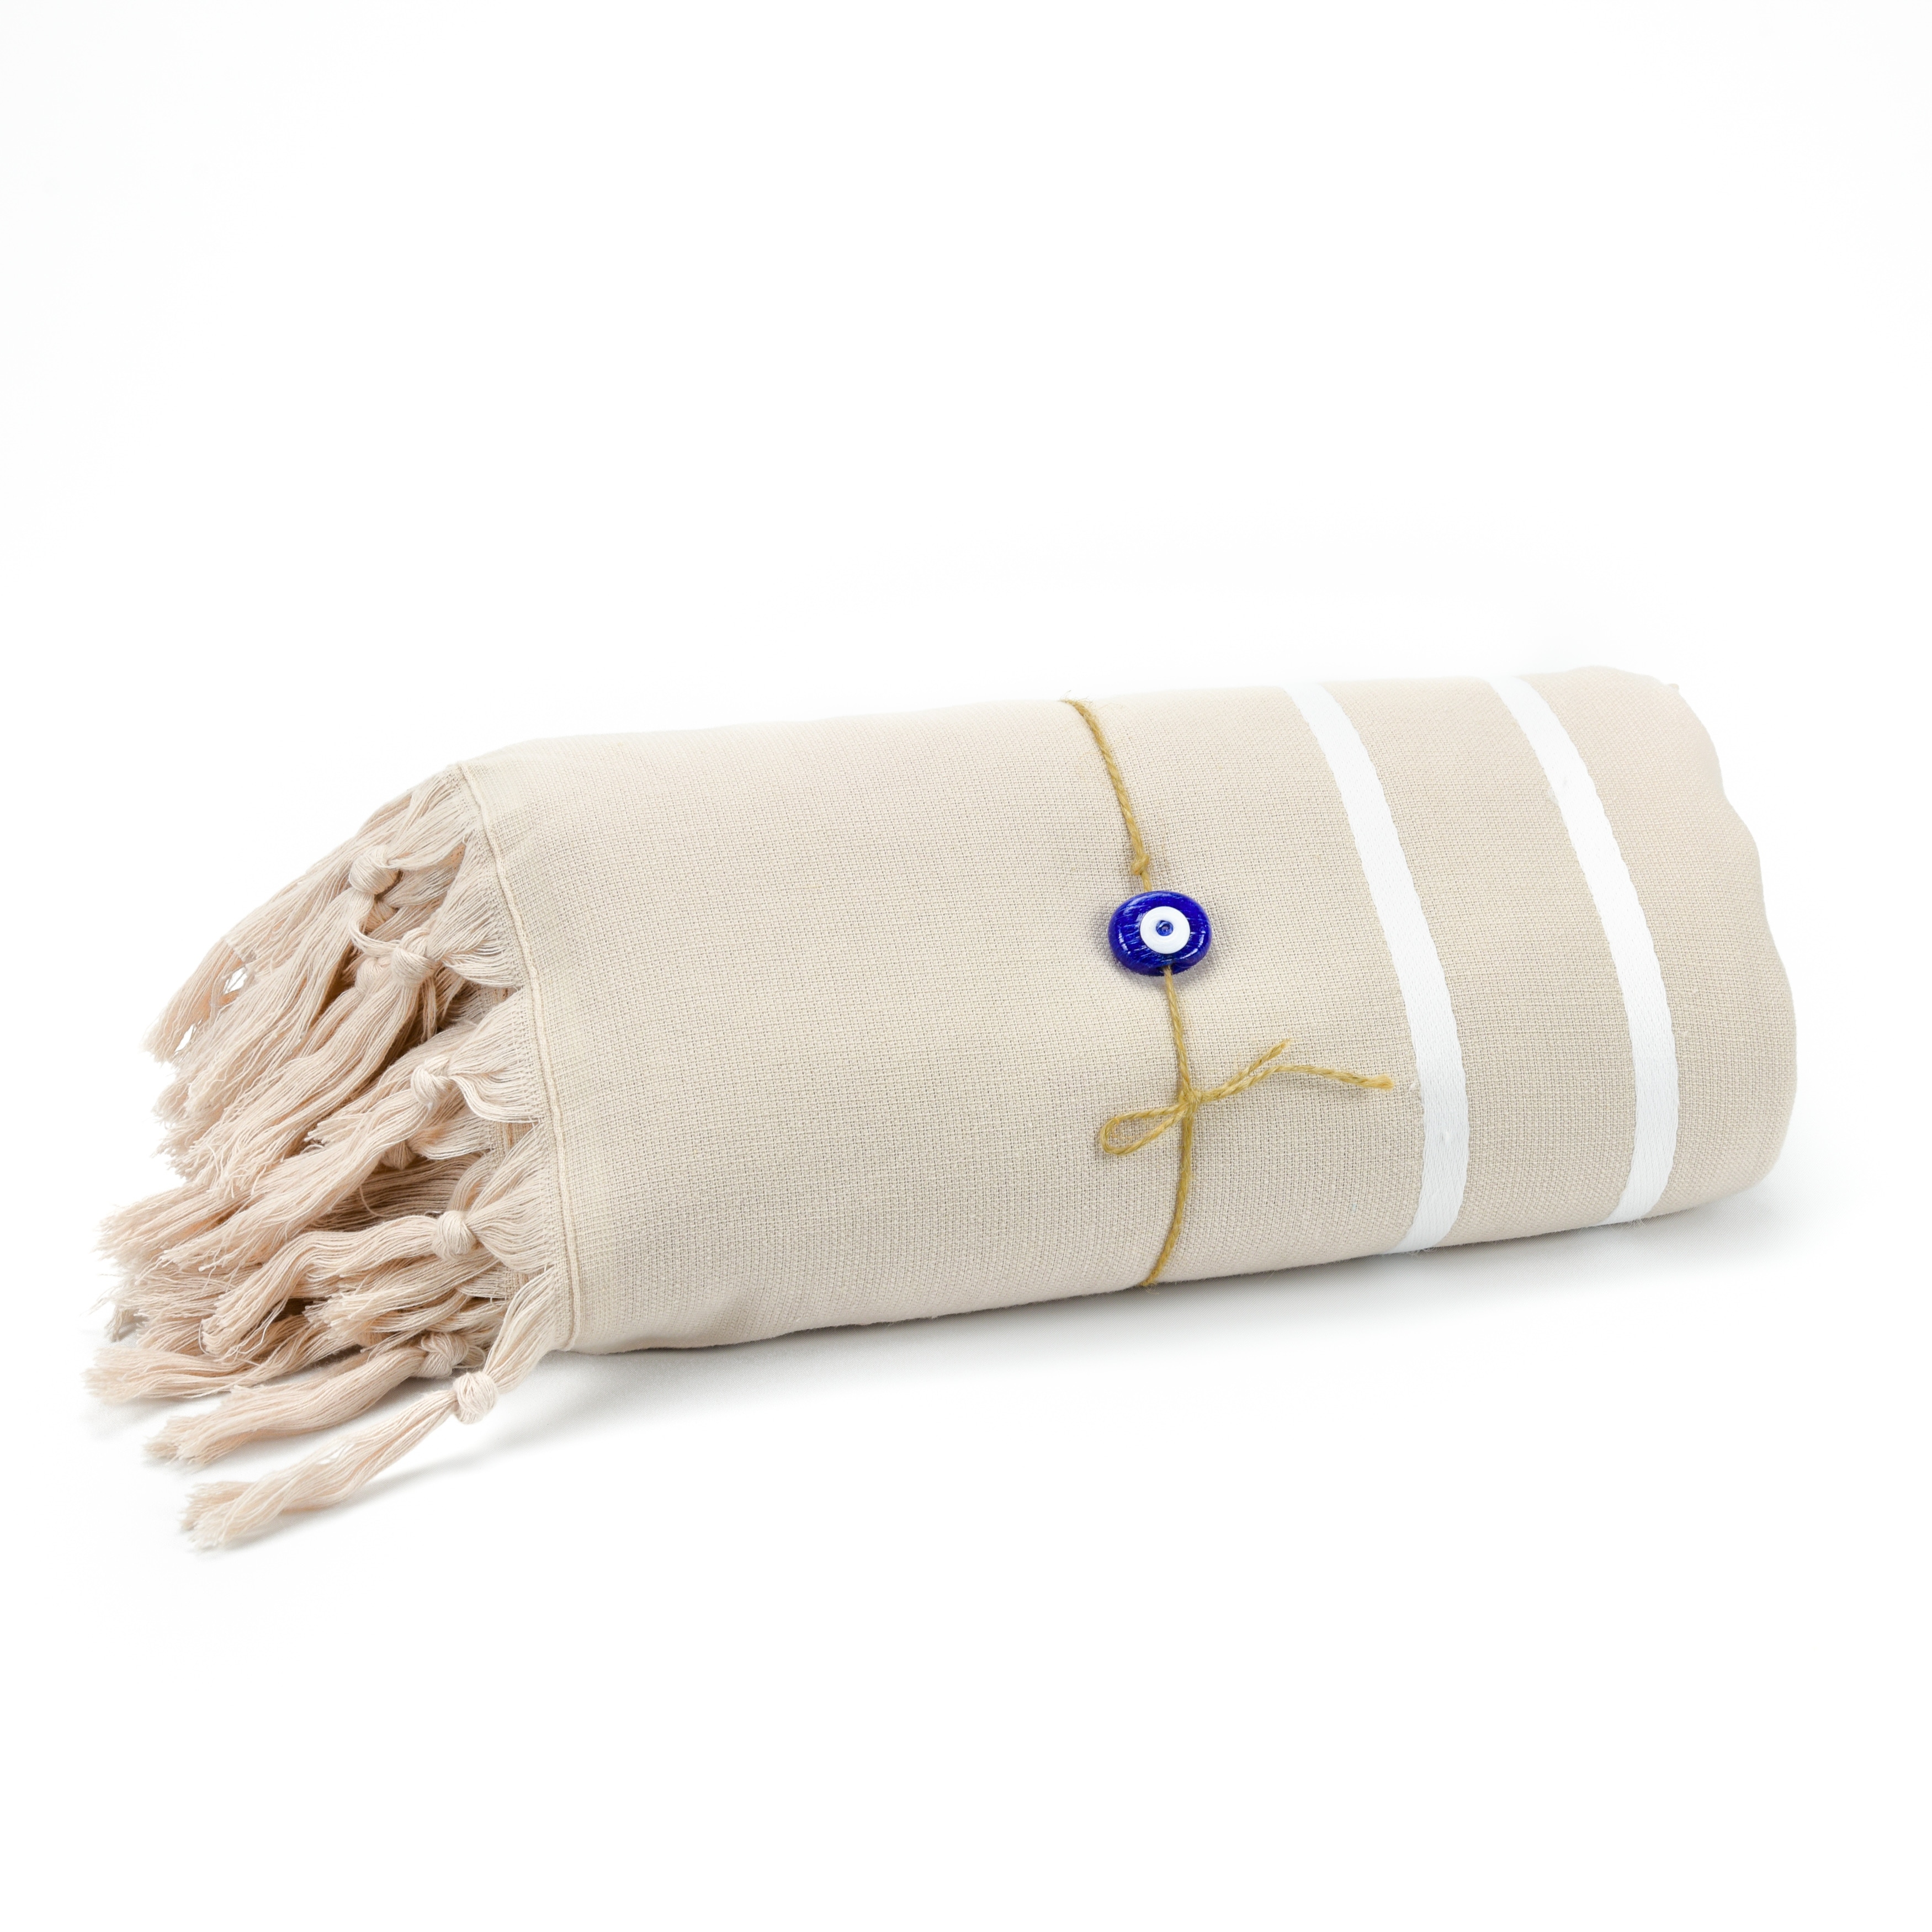 NEW Peshtemal Turkish Towels High Quality 100% Pure Turkish Cotton Assorted